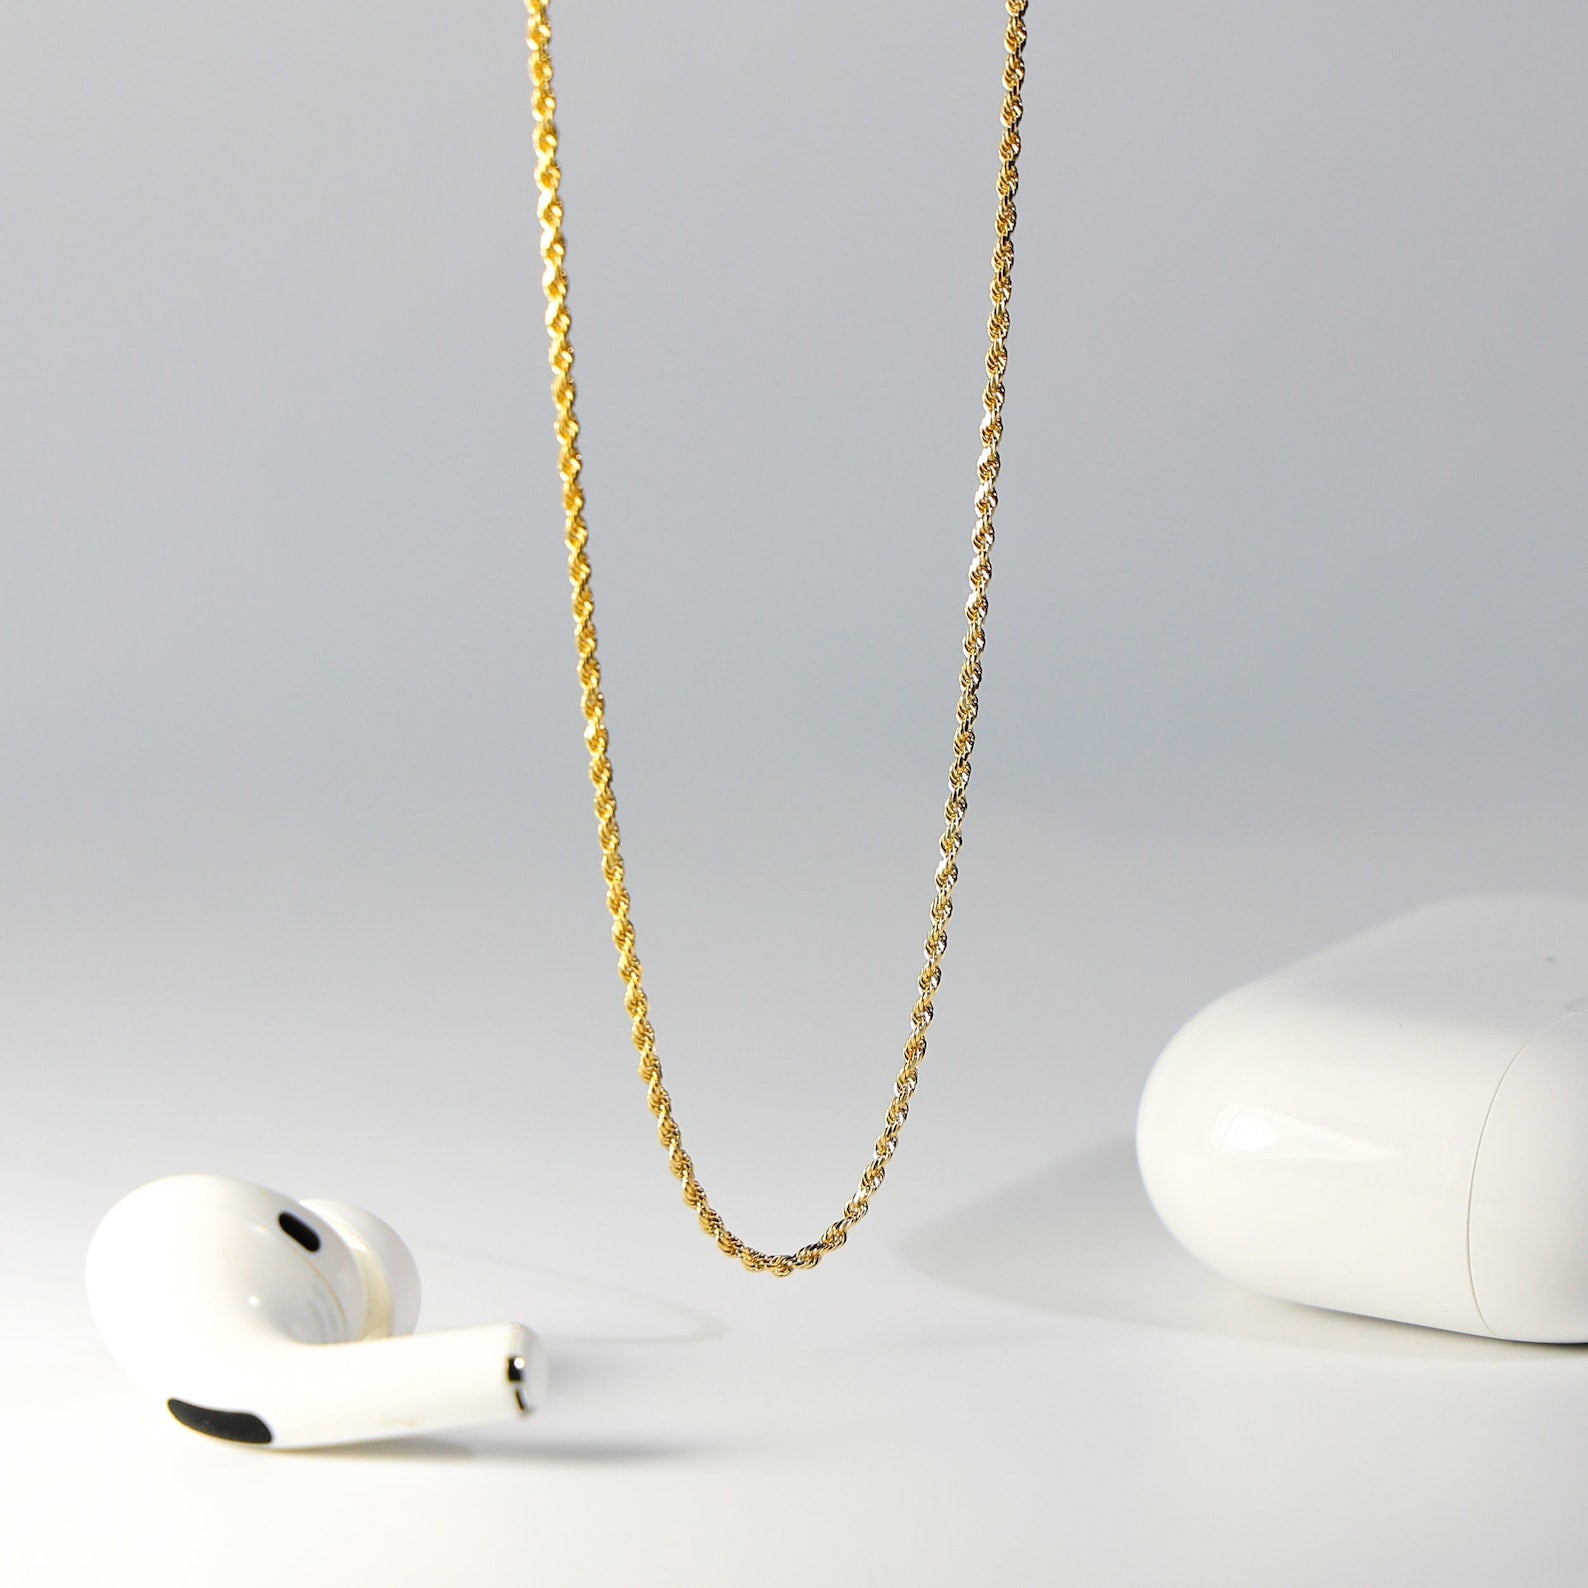 Gold Cornicello Italian Horn Pendant Model-793 - Charlie & Co. Jewelry